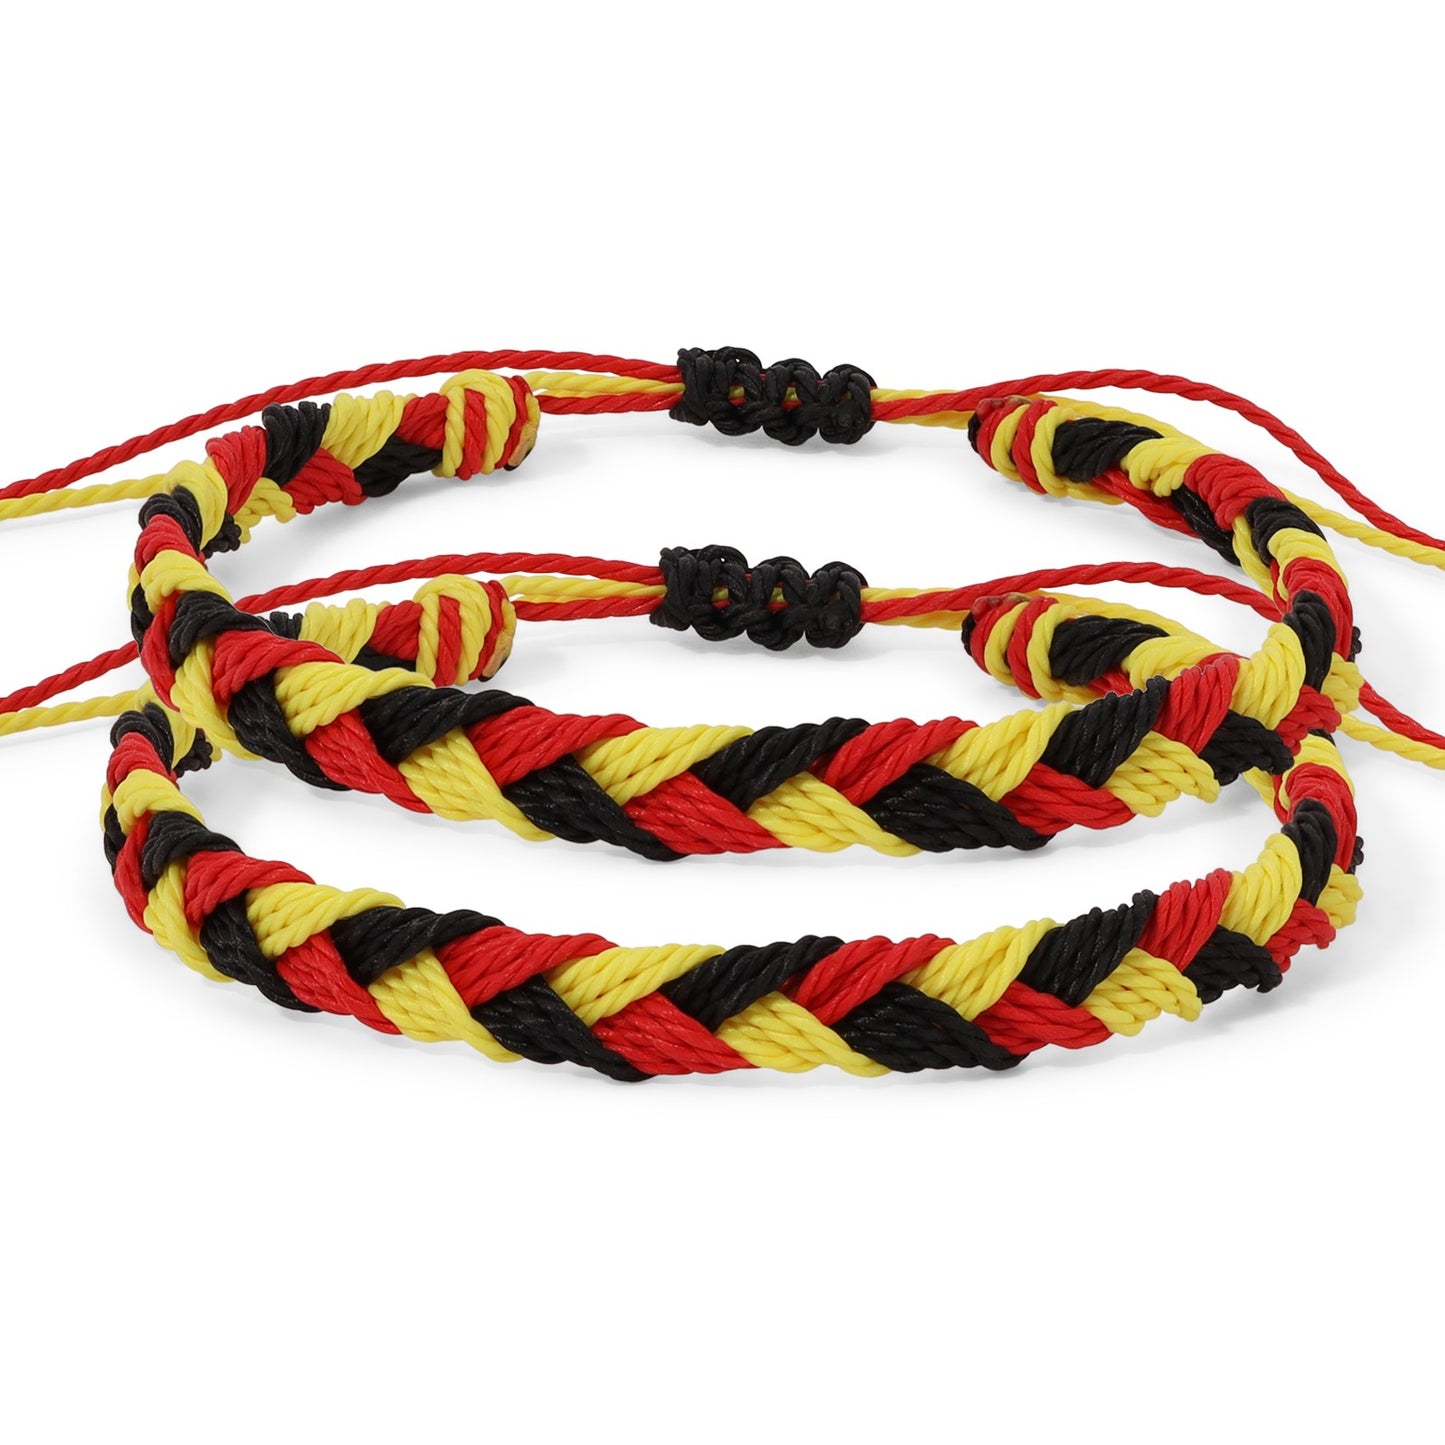 Red, Black and Gold Team Color Braided Bracelets - Set of 2